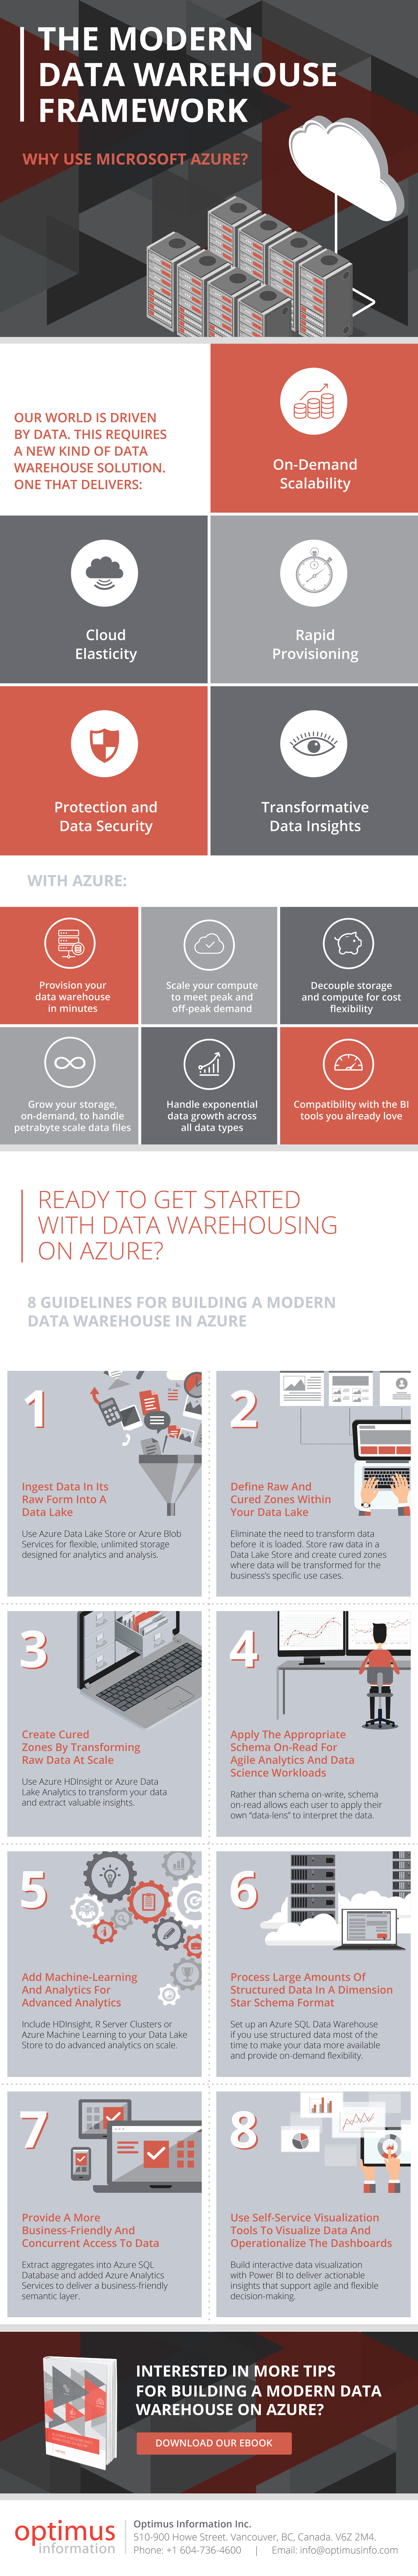 The-Modern-Data-Warehouse-Framework Infographic - The Modern Data Warehouse Framework